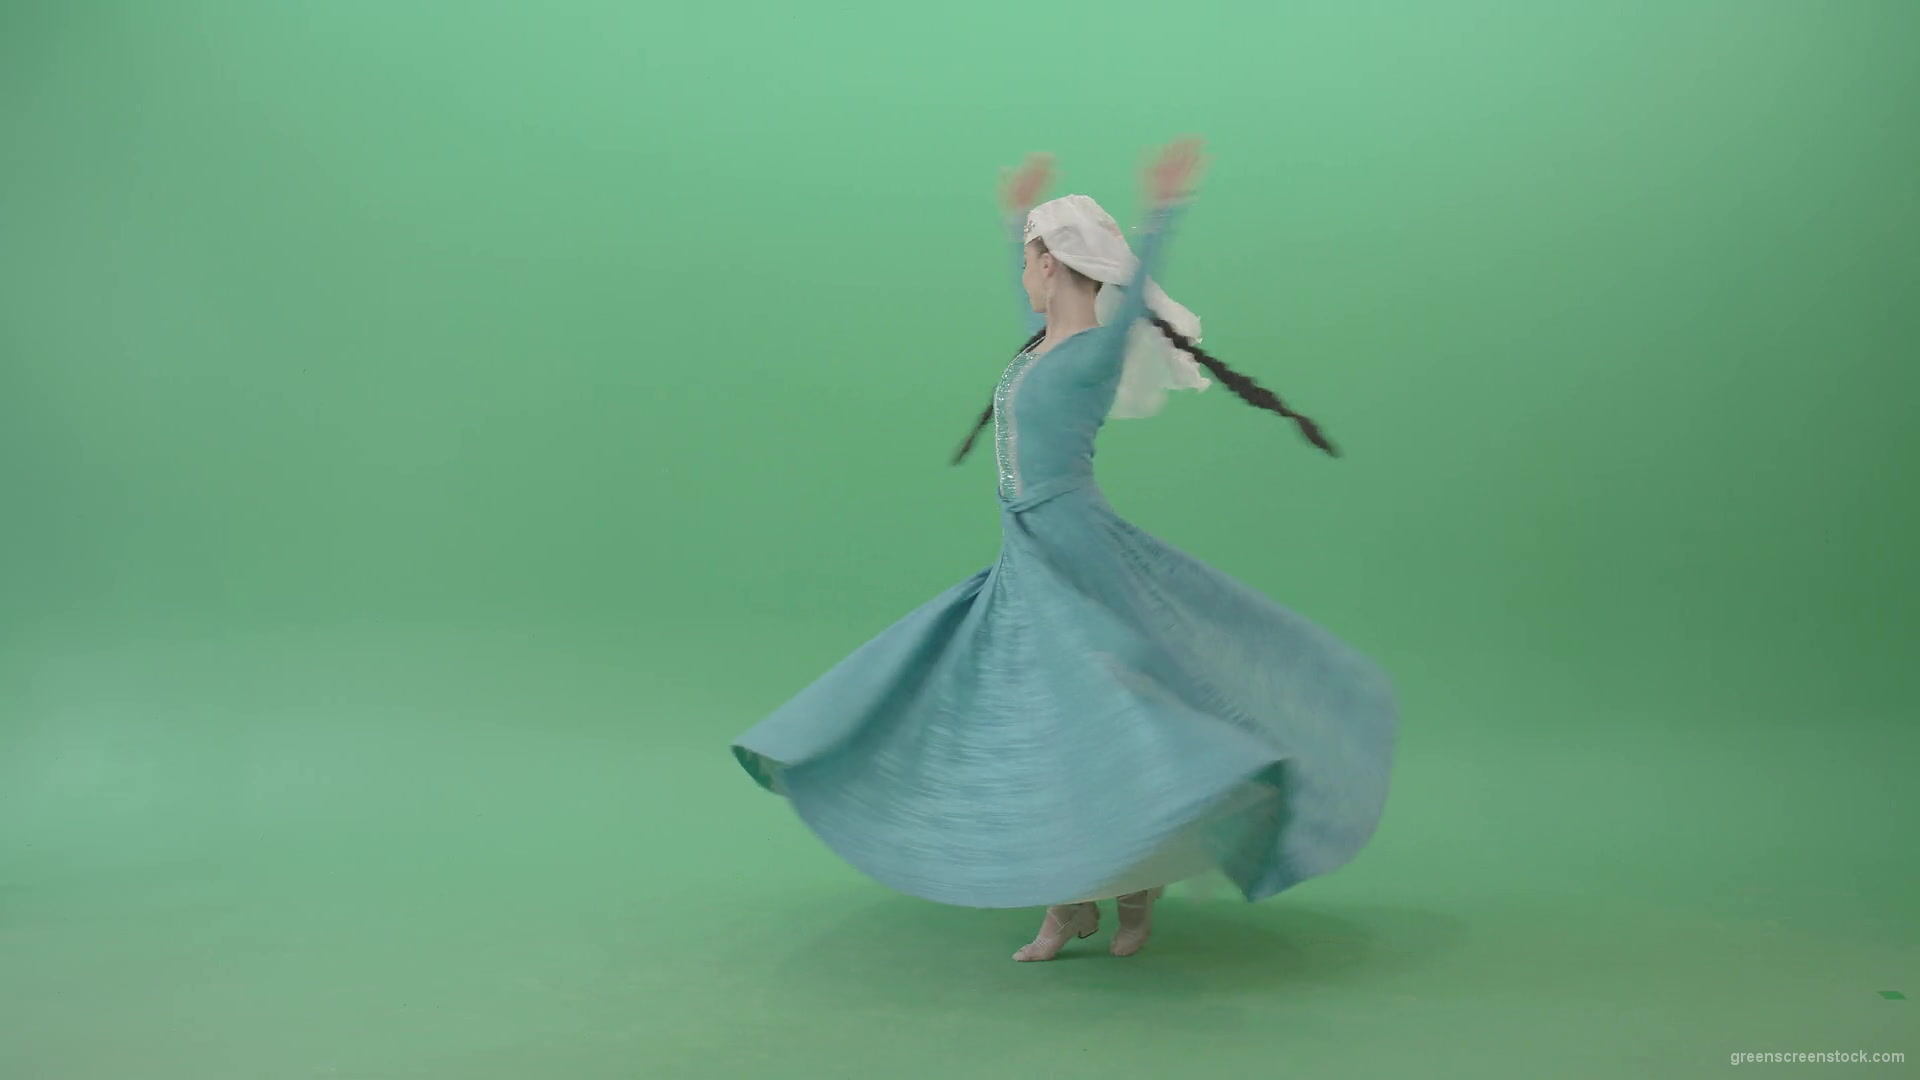 Iberian-Colchis-Woman-spinning-Georgian-Perkhuli-dance-in-blue-dress-isolated-on-Green-Screen-4K-Video-Footage-1920_008 Green Screen Stock